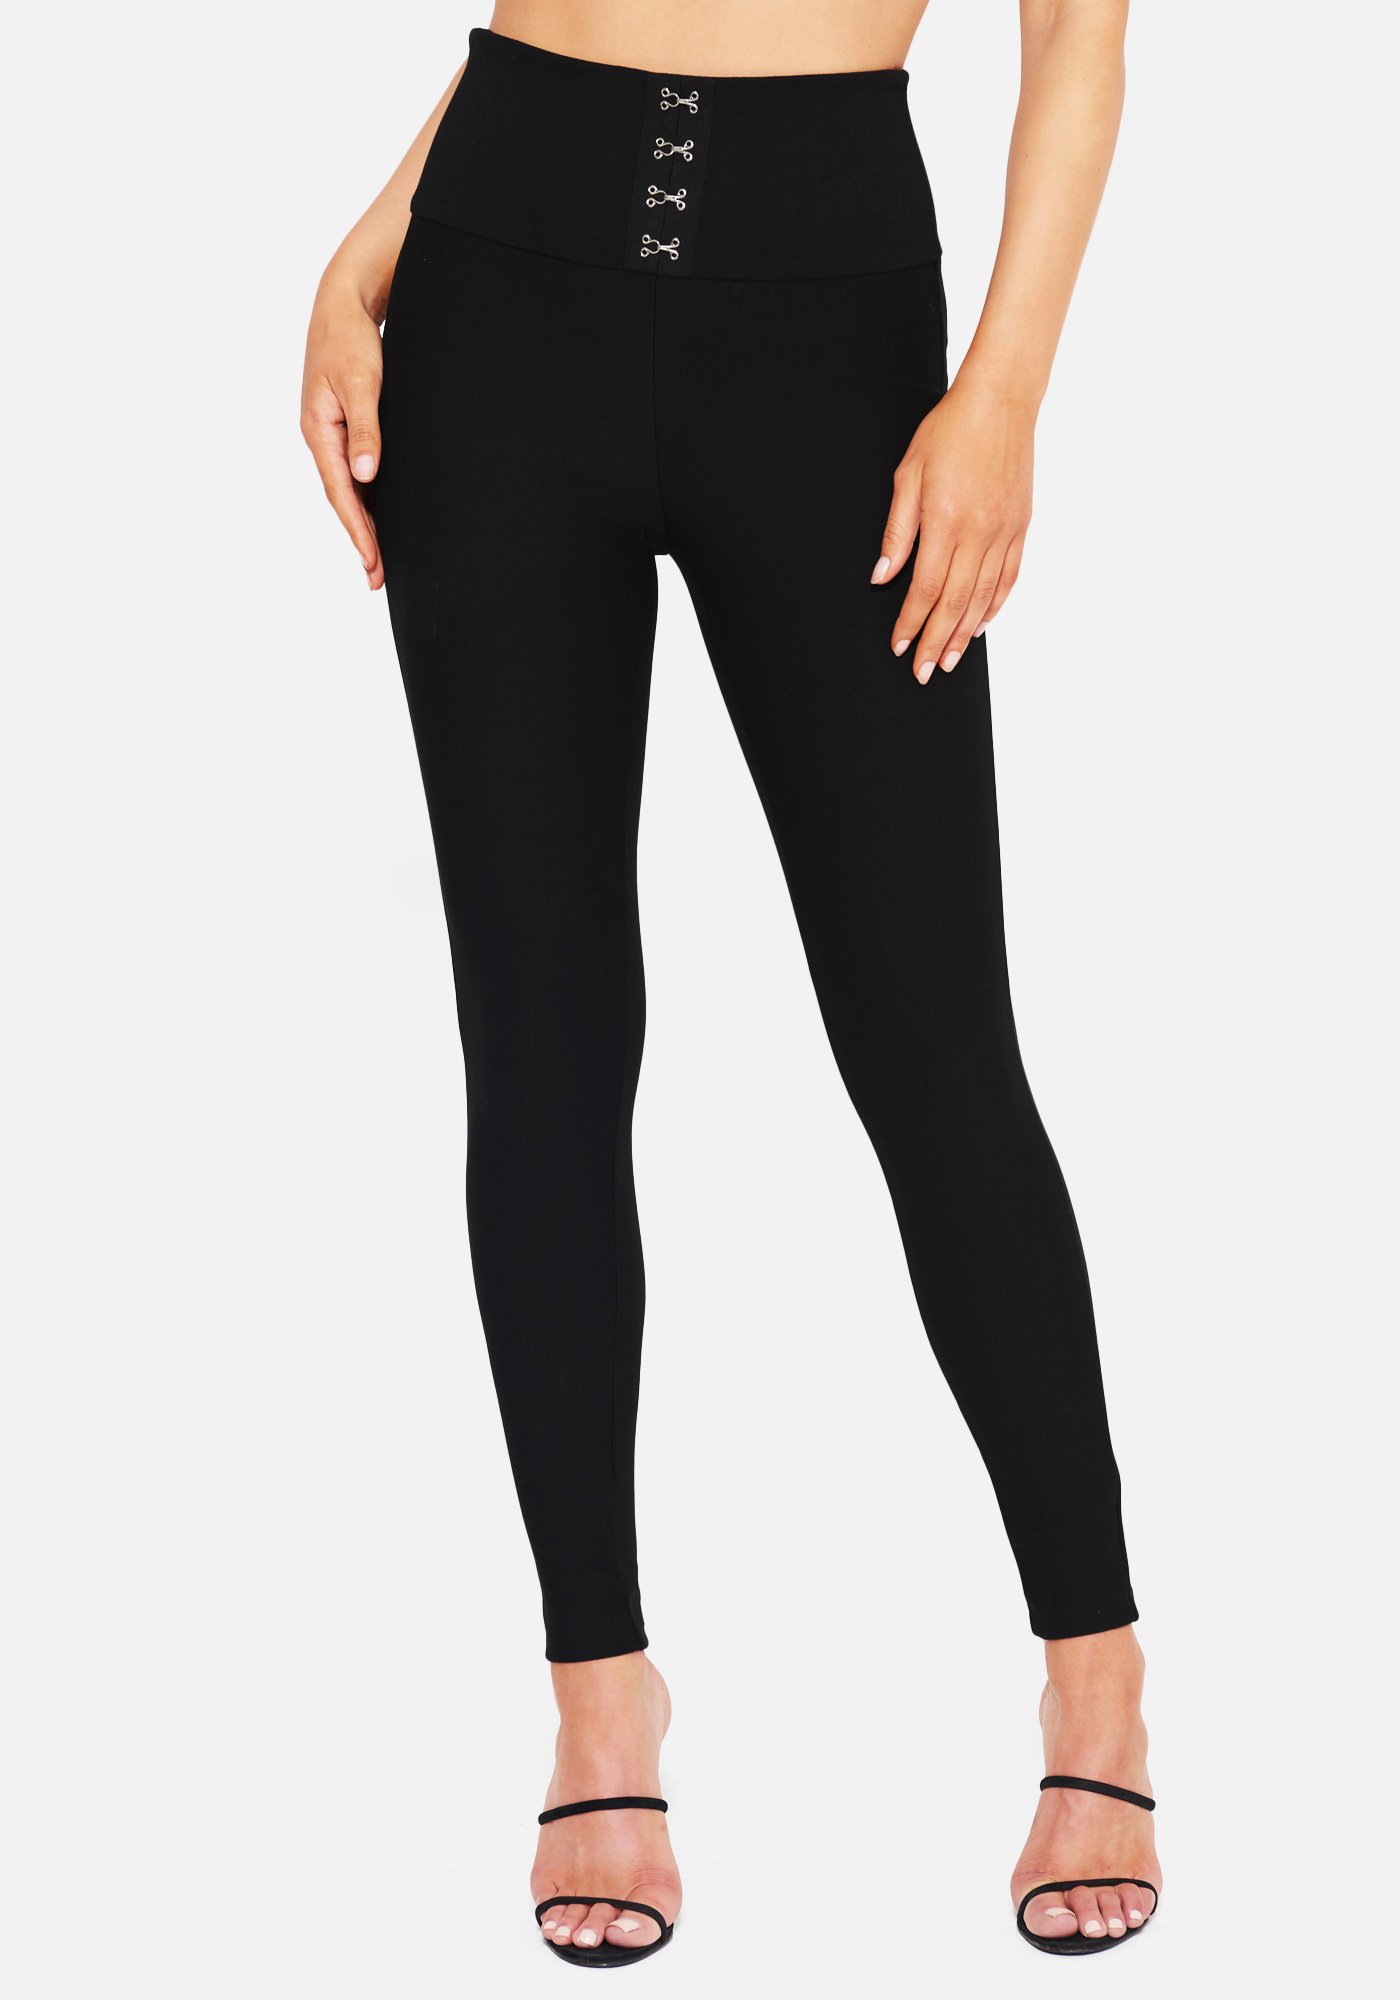 Bebe Women's Corset High Waist Legging, Size XL in BLACK Spandex/Nylon